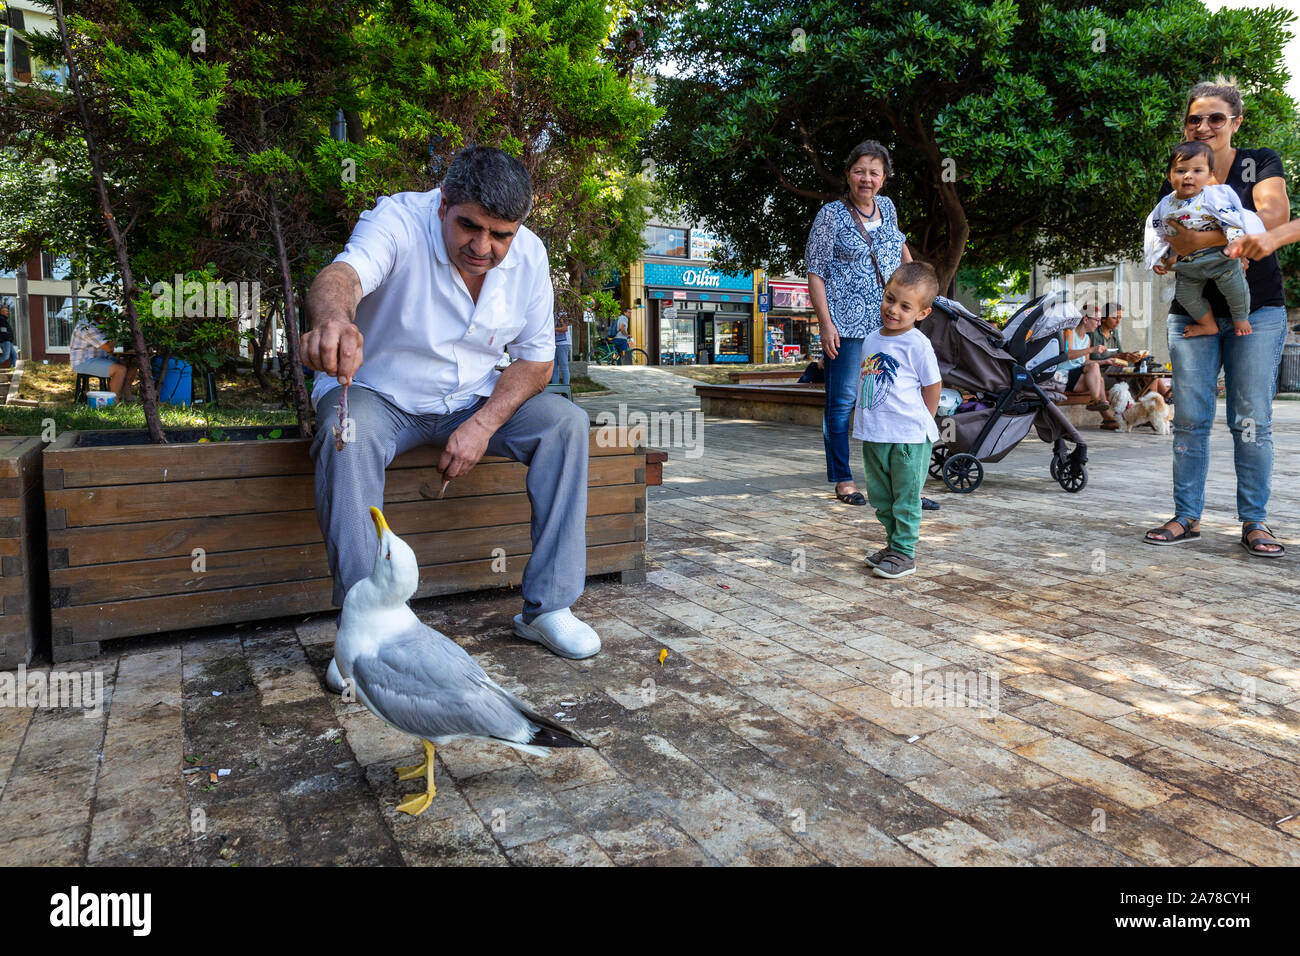 People feeding seagull at Kuzguncuk shore. Kuzguncuk is a neighborhood in the Uskudar district on the Asian side of the Bosphorus in Istanbul, Turkey. Stock Photo